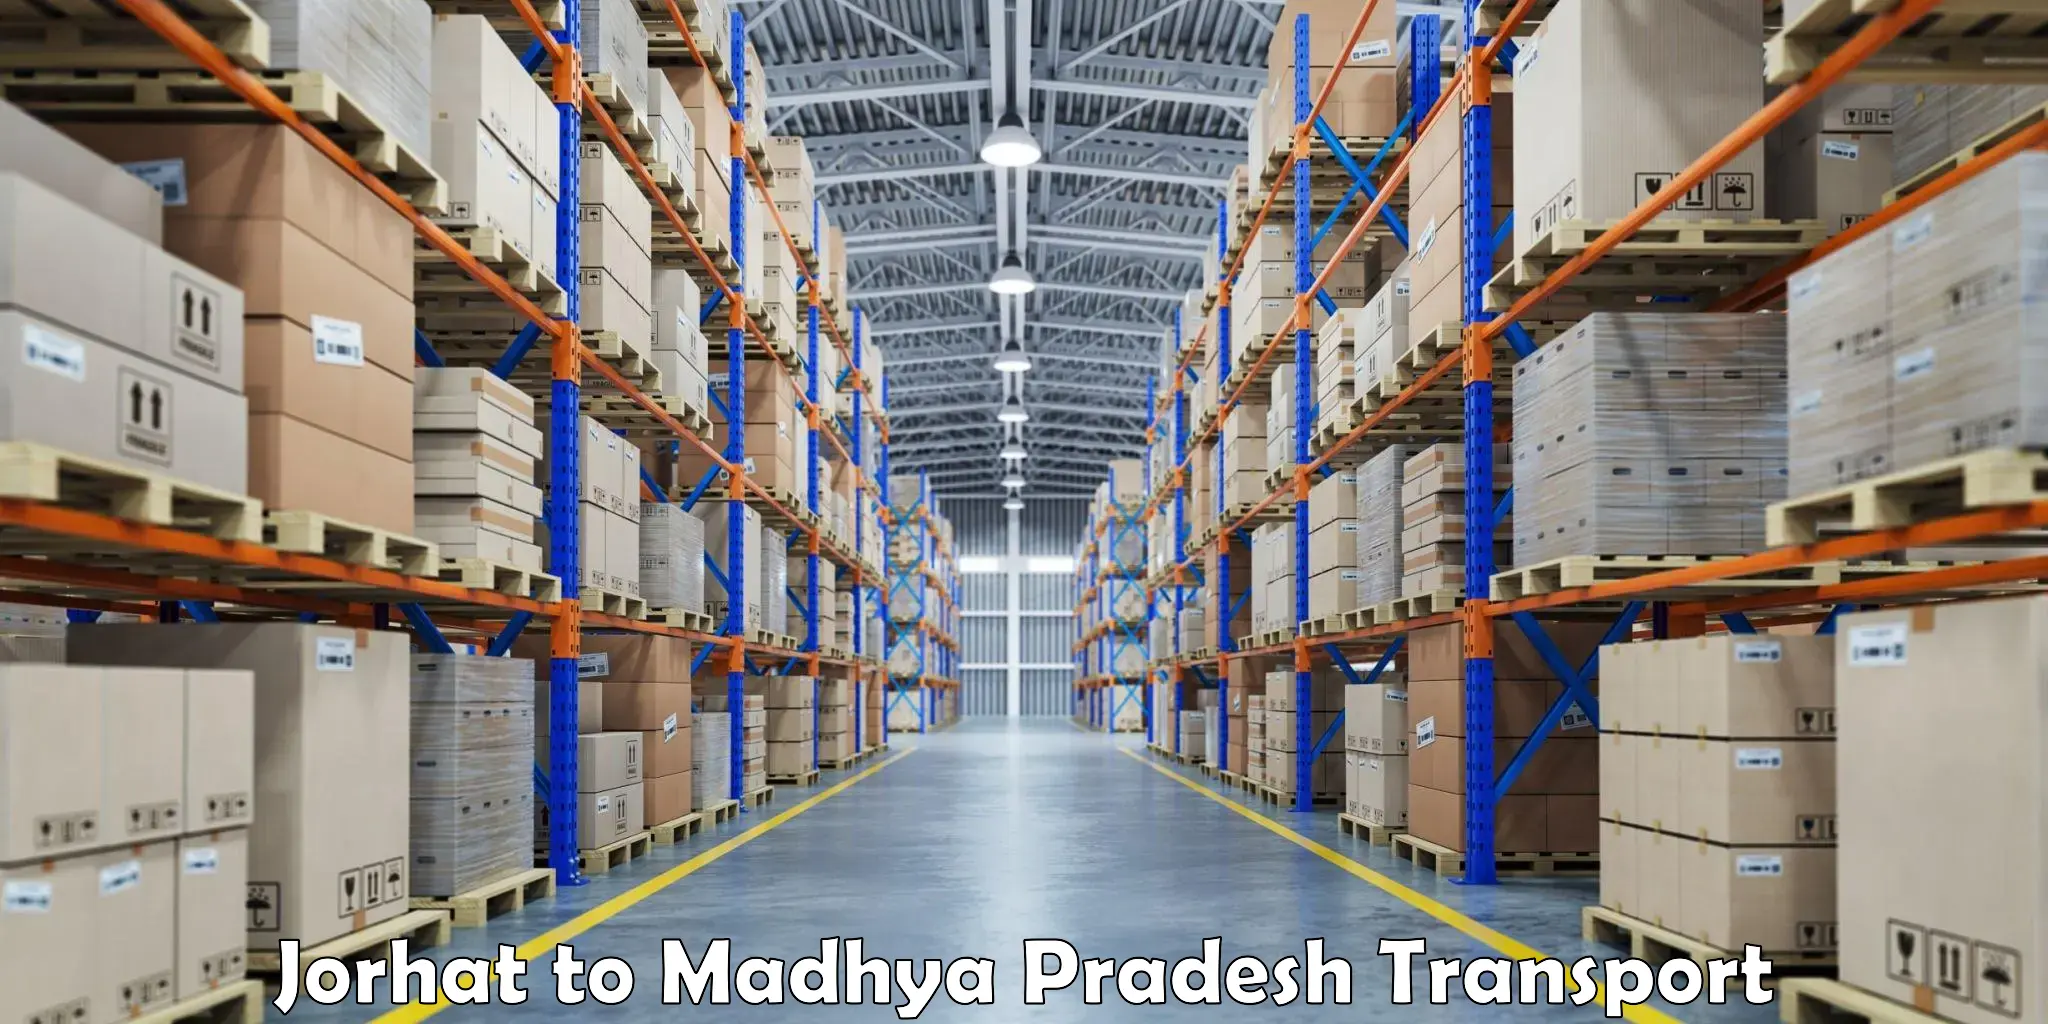 Lorry transport service Jorhat to Madwas